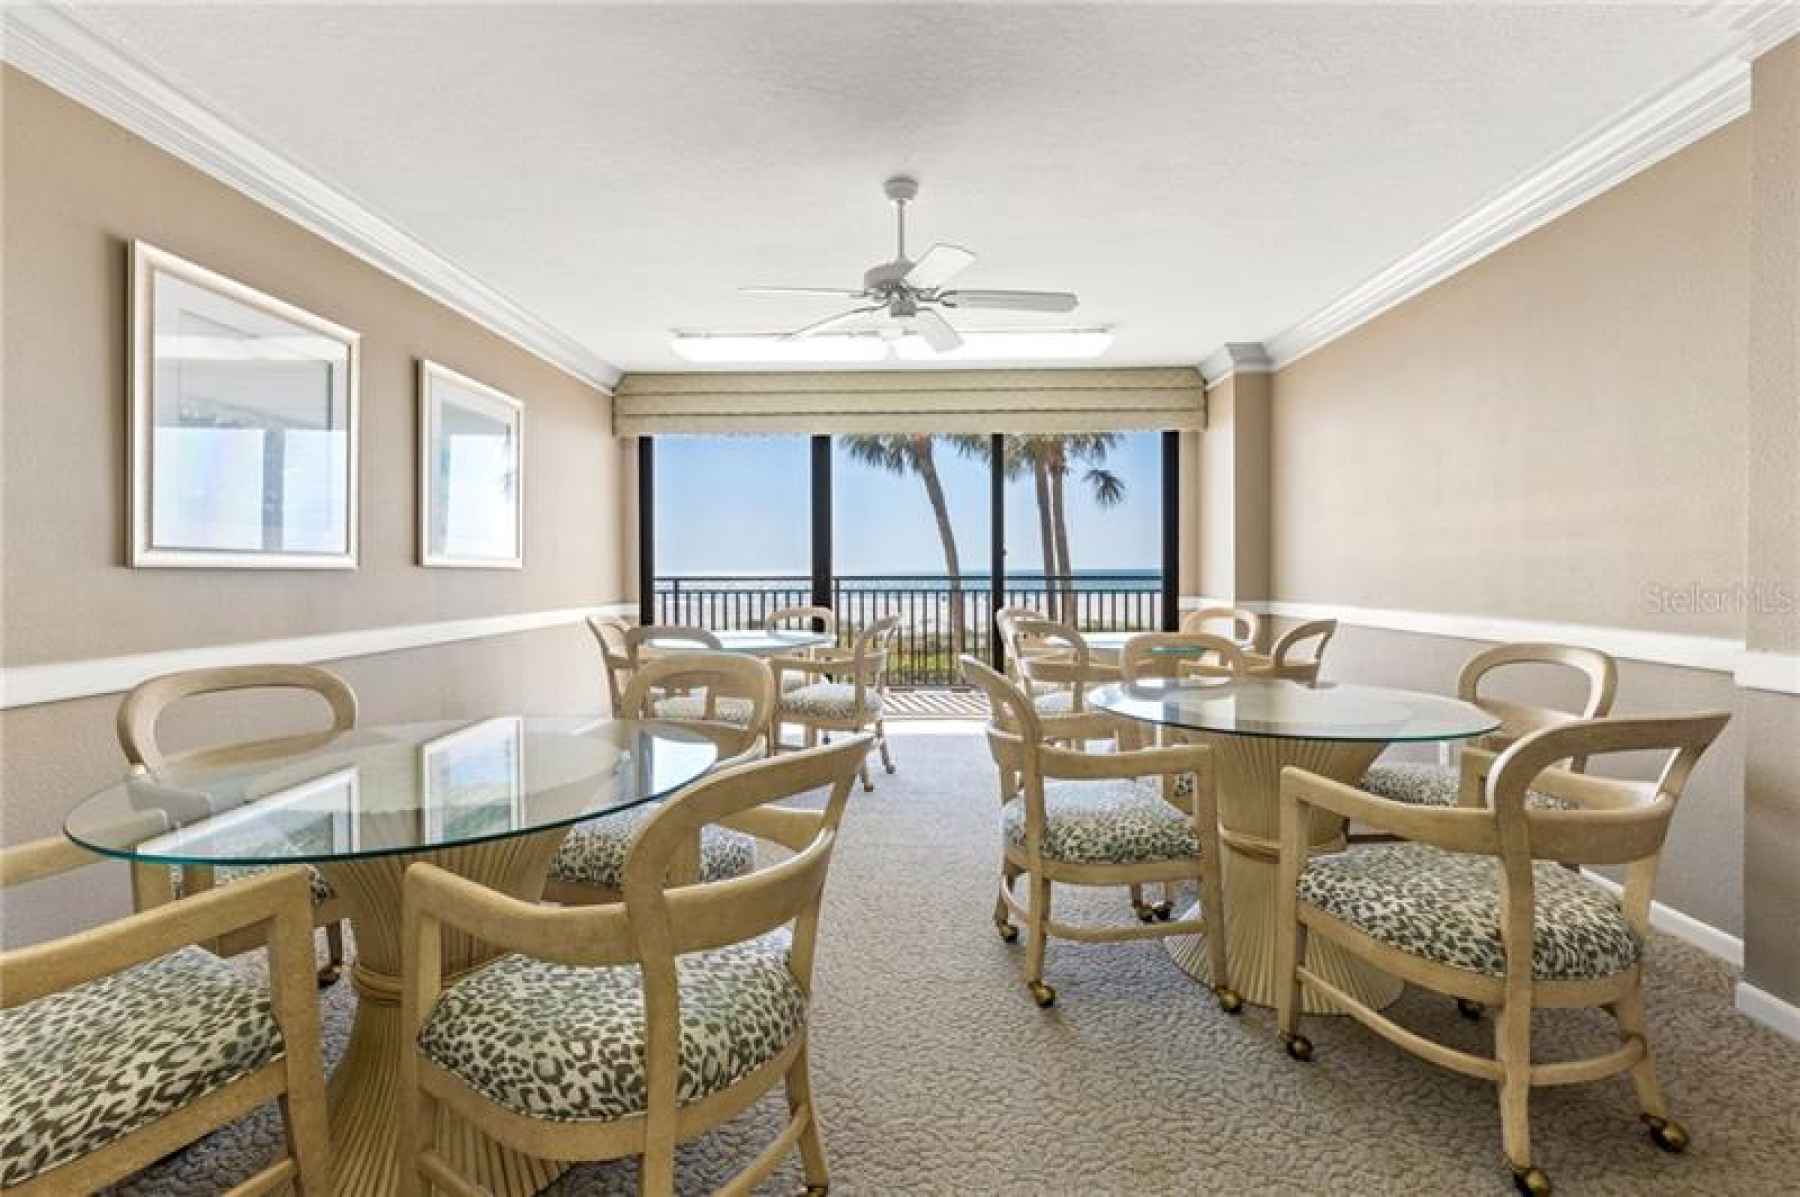 Banquet room with beach views.